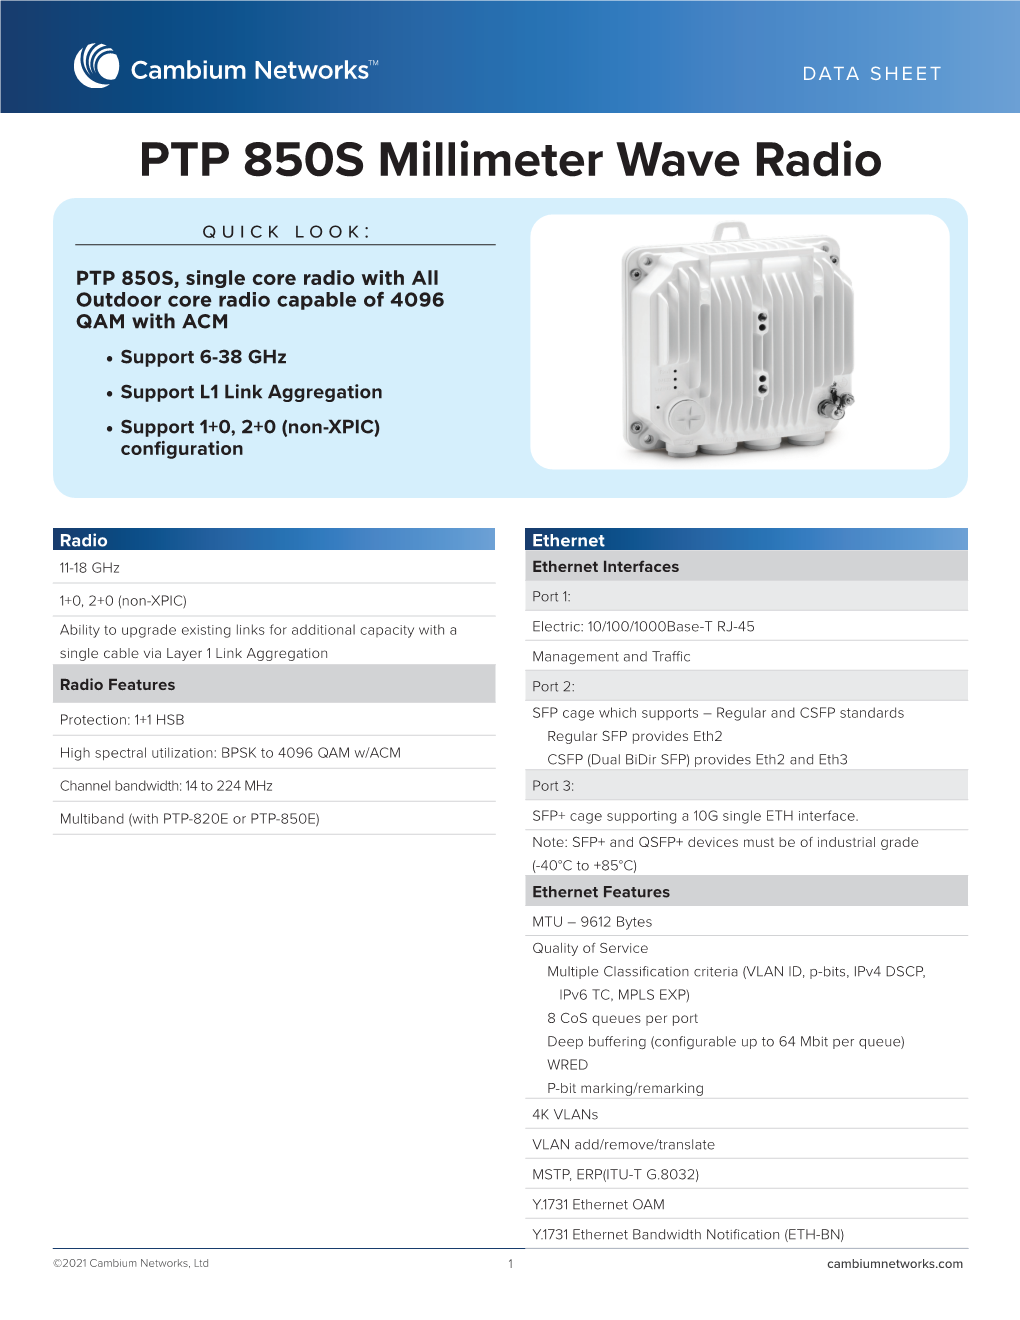 PTP 850S Data Sheet